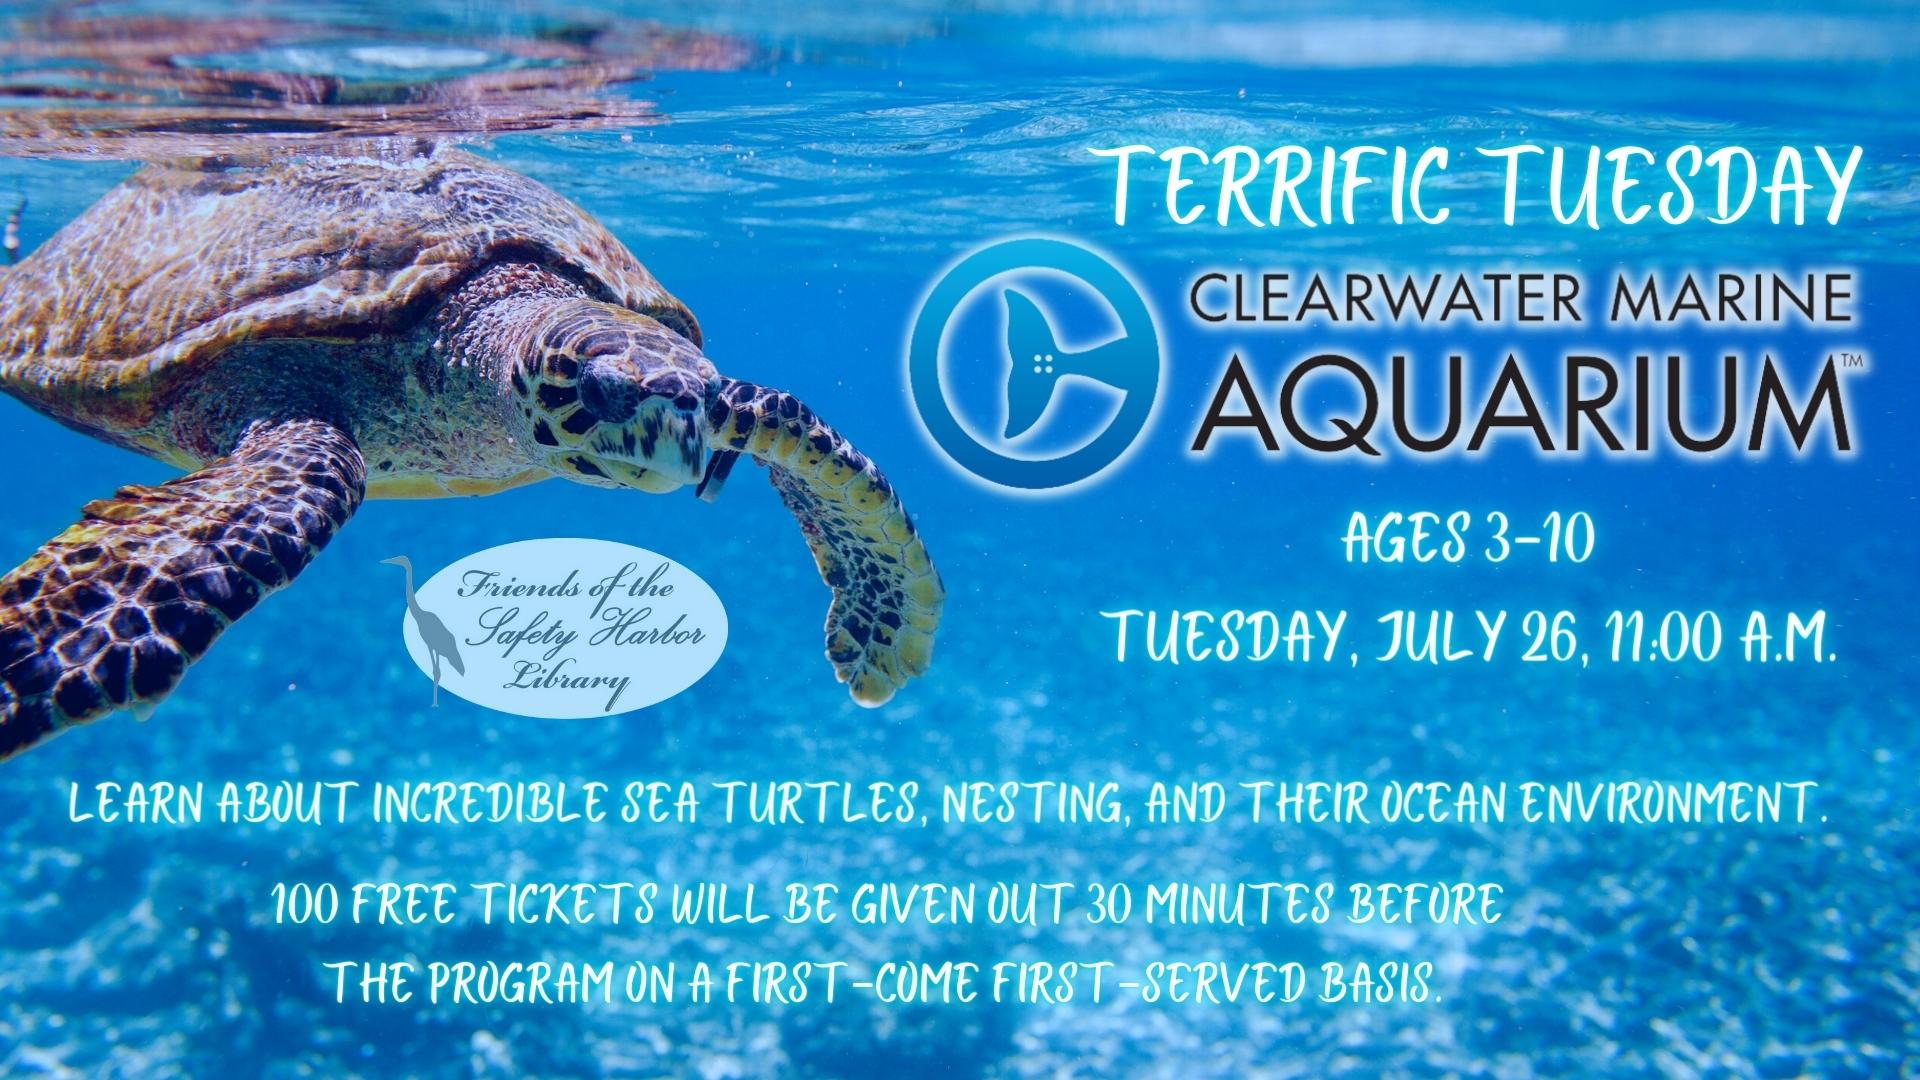 Clearwater Marine Aquarium Sea Turtle Talk